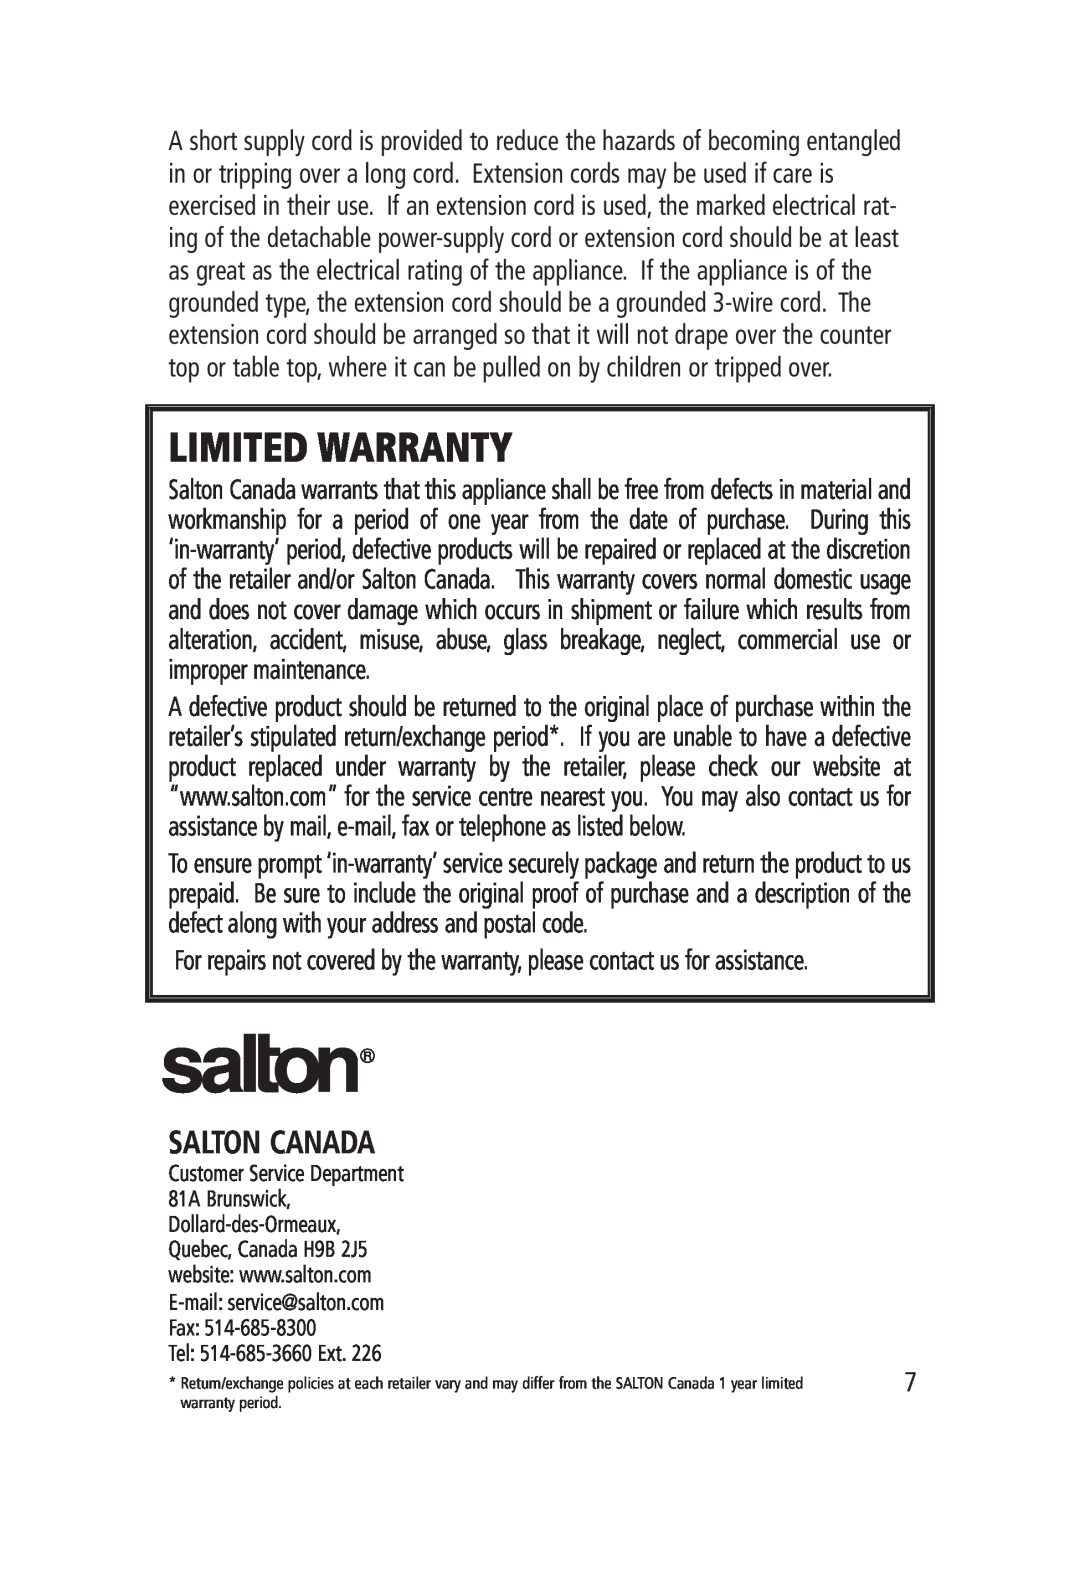 Salton CG-1174 manual Salton Canada, Limited Warranty, Tel 514-685-3660 Ext 